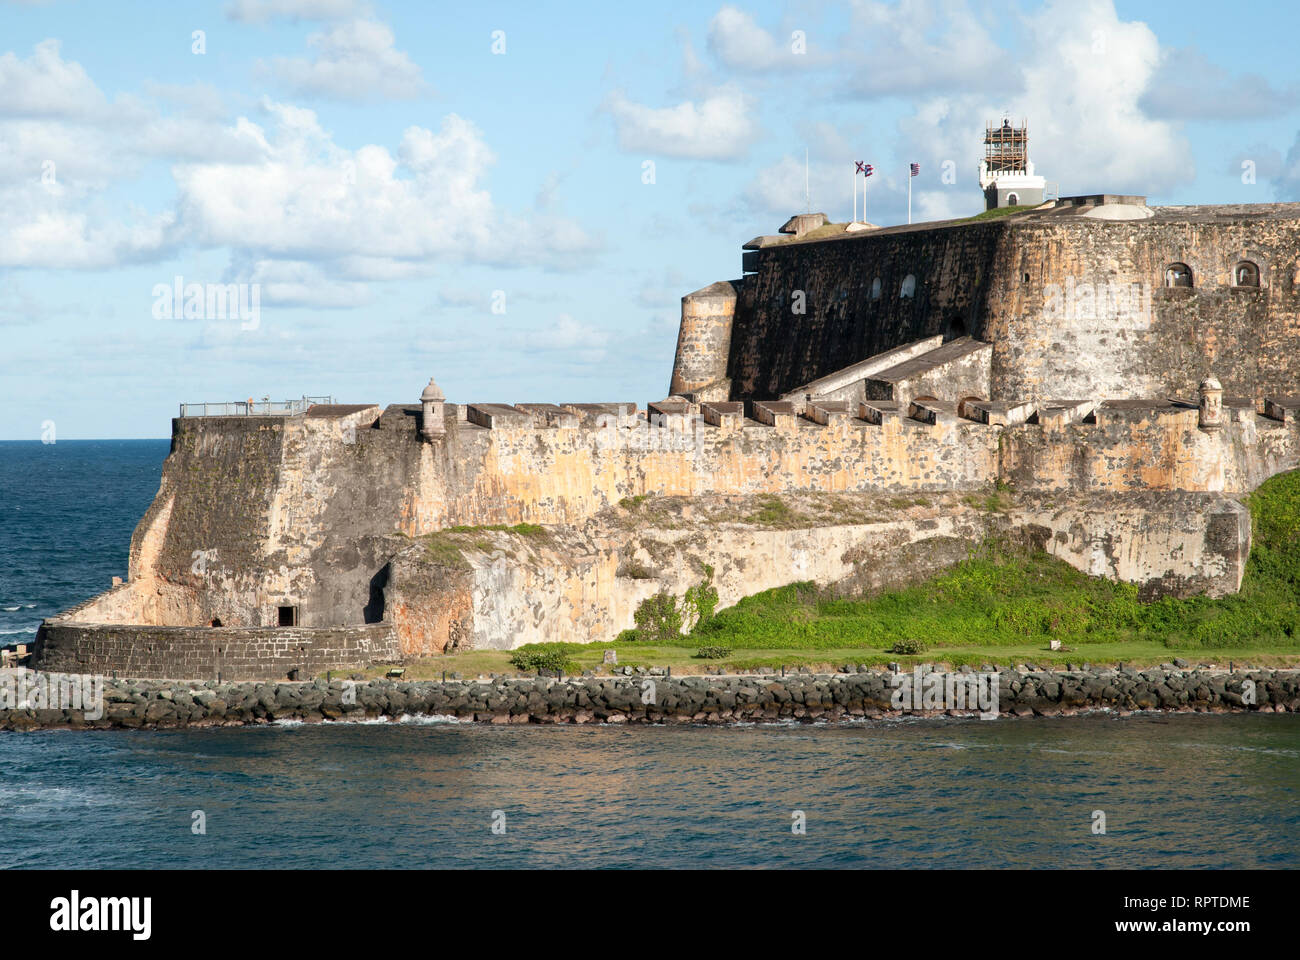 Die historischen 16. Jahrhundert spanische Festung San Felipe del Morro in der Altstadt von San Juan (Puerto Rico). Stockfoto